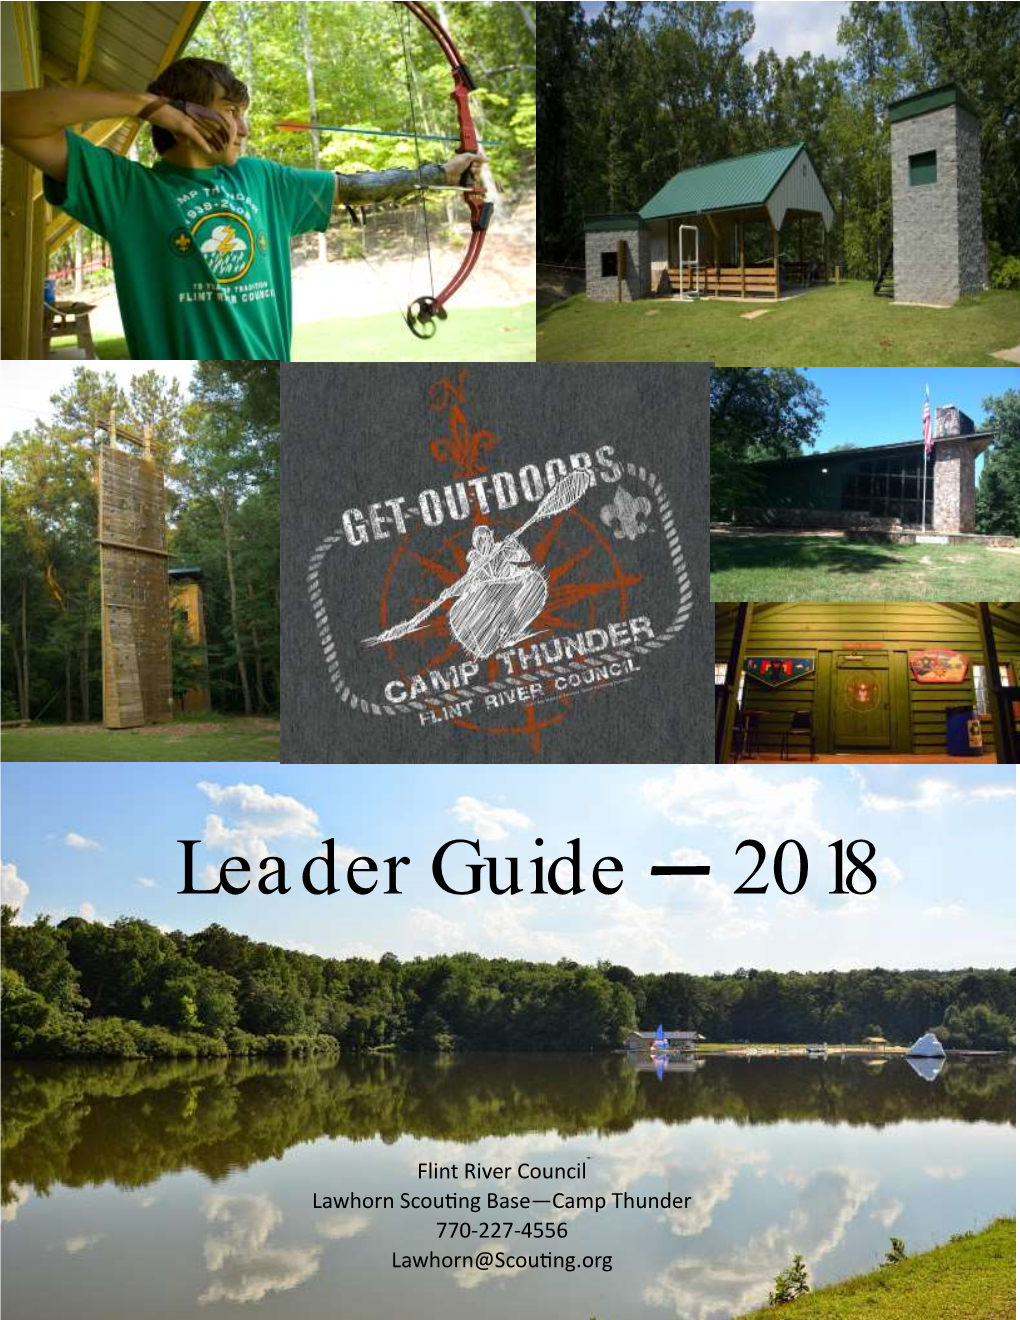 Leader Guide — 2018